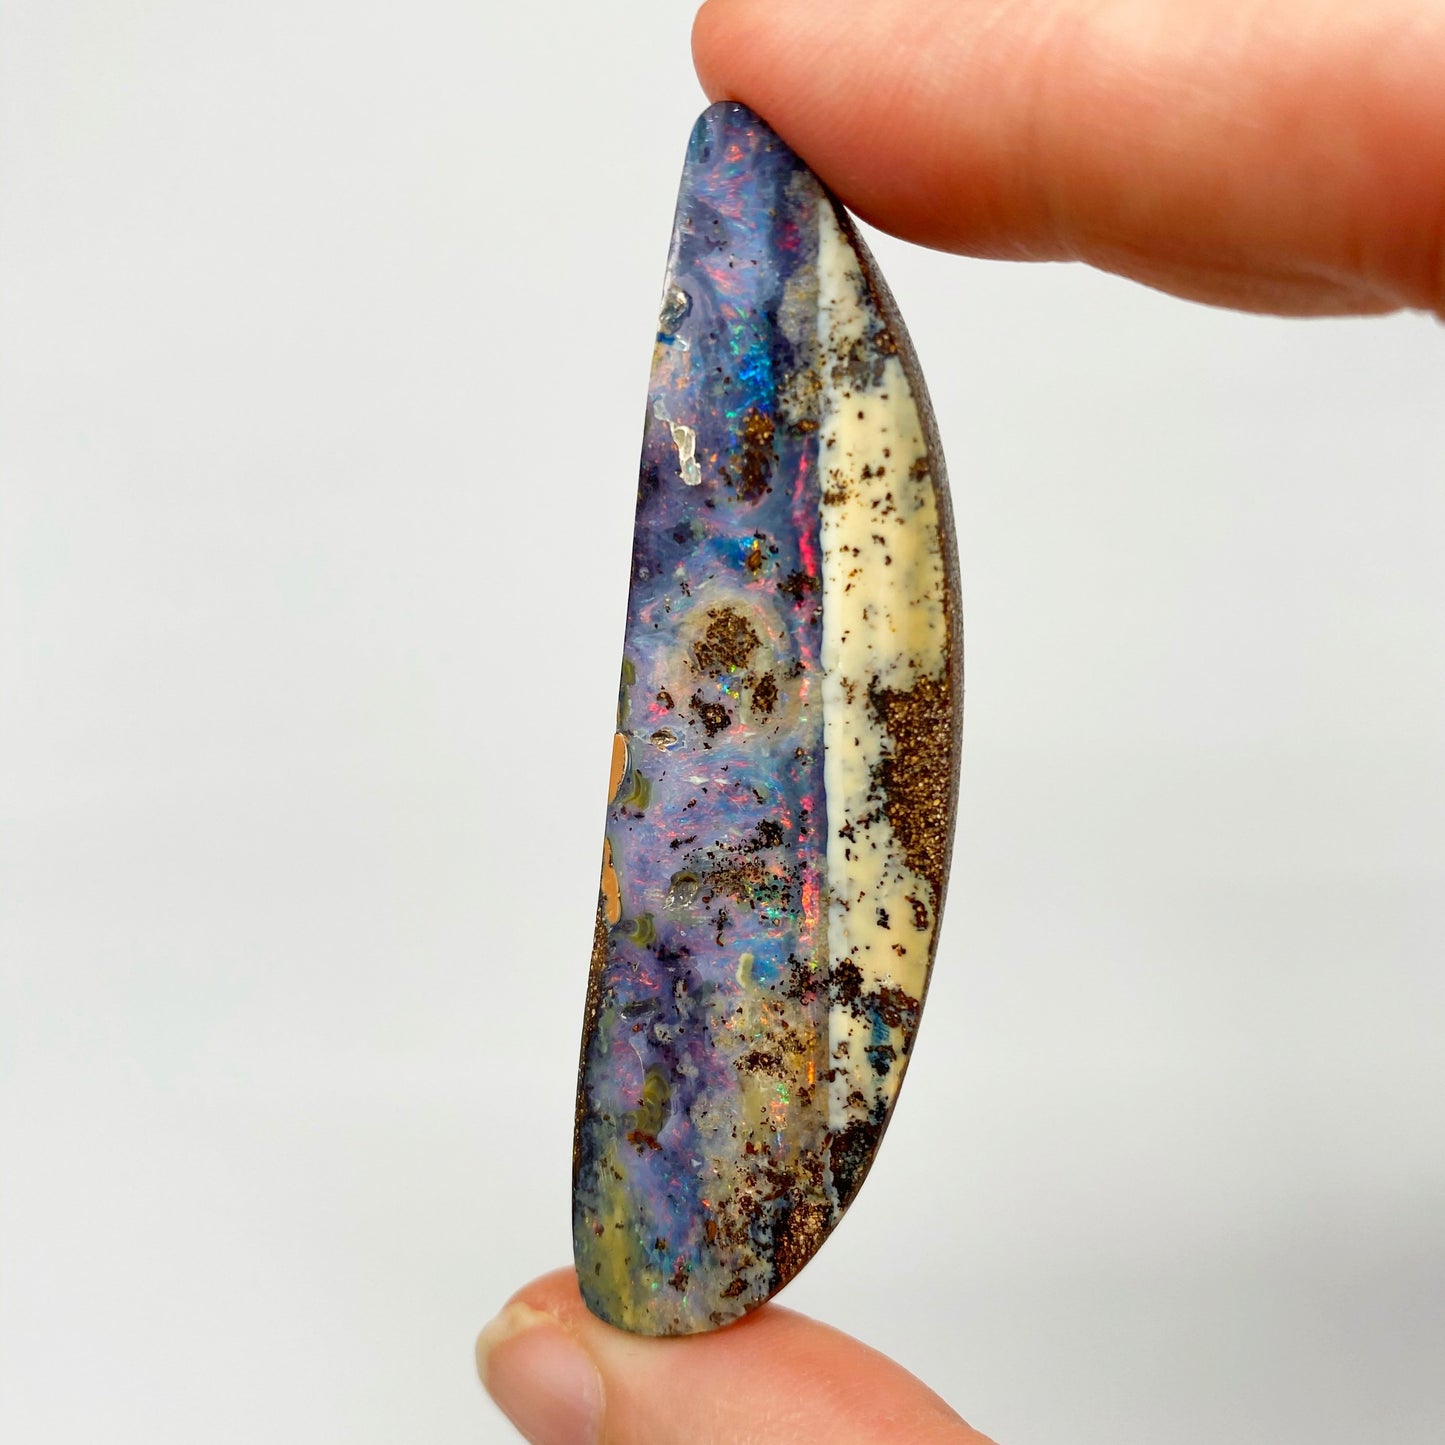 Australian Boulder Opal - 87 Ct pink arch boulder opal specimen - Broken River Mining